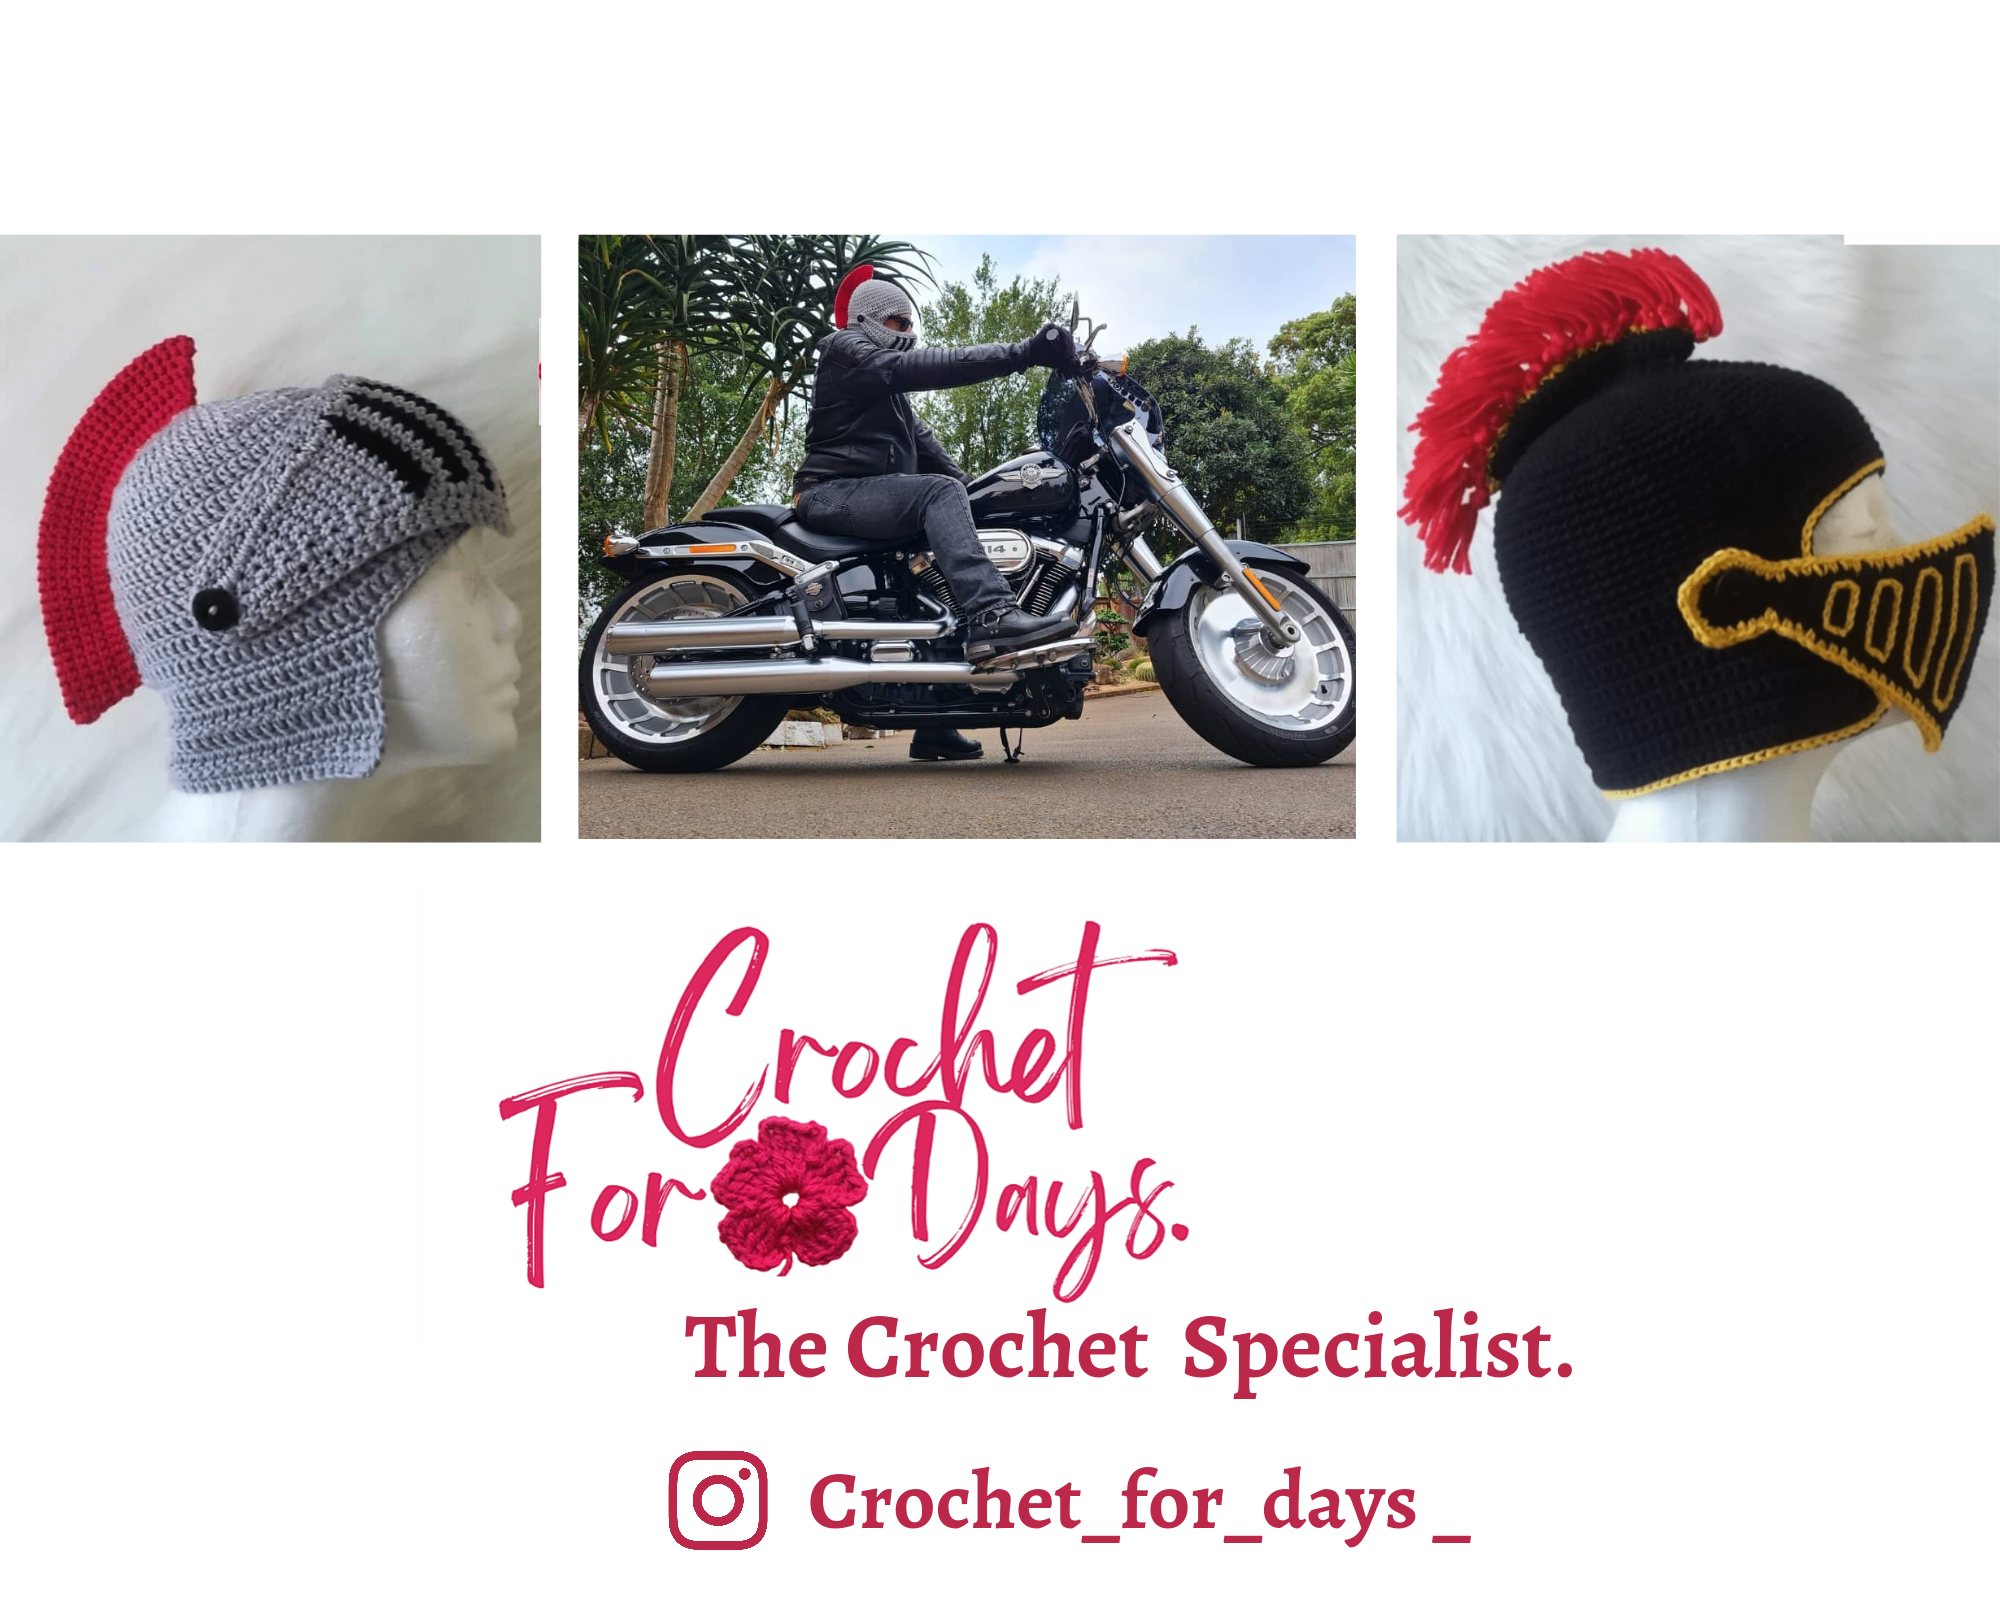 Crochet For Days iloveza.com January 2022 advert